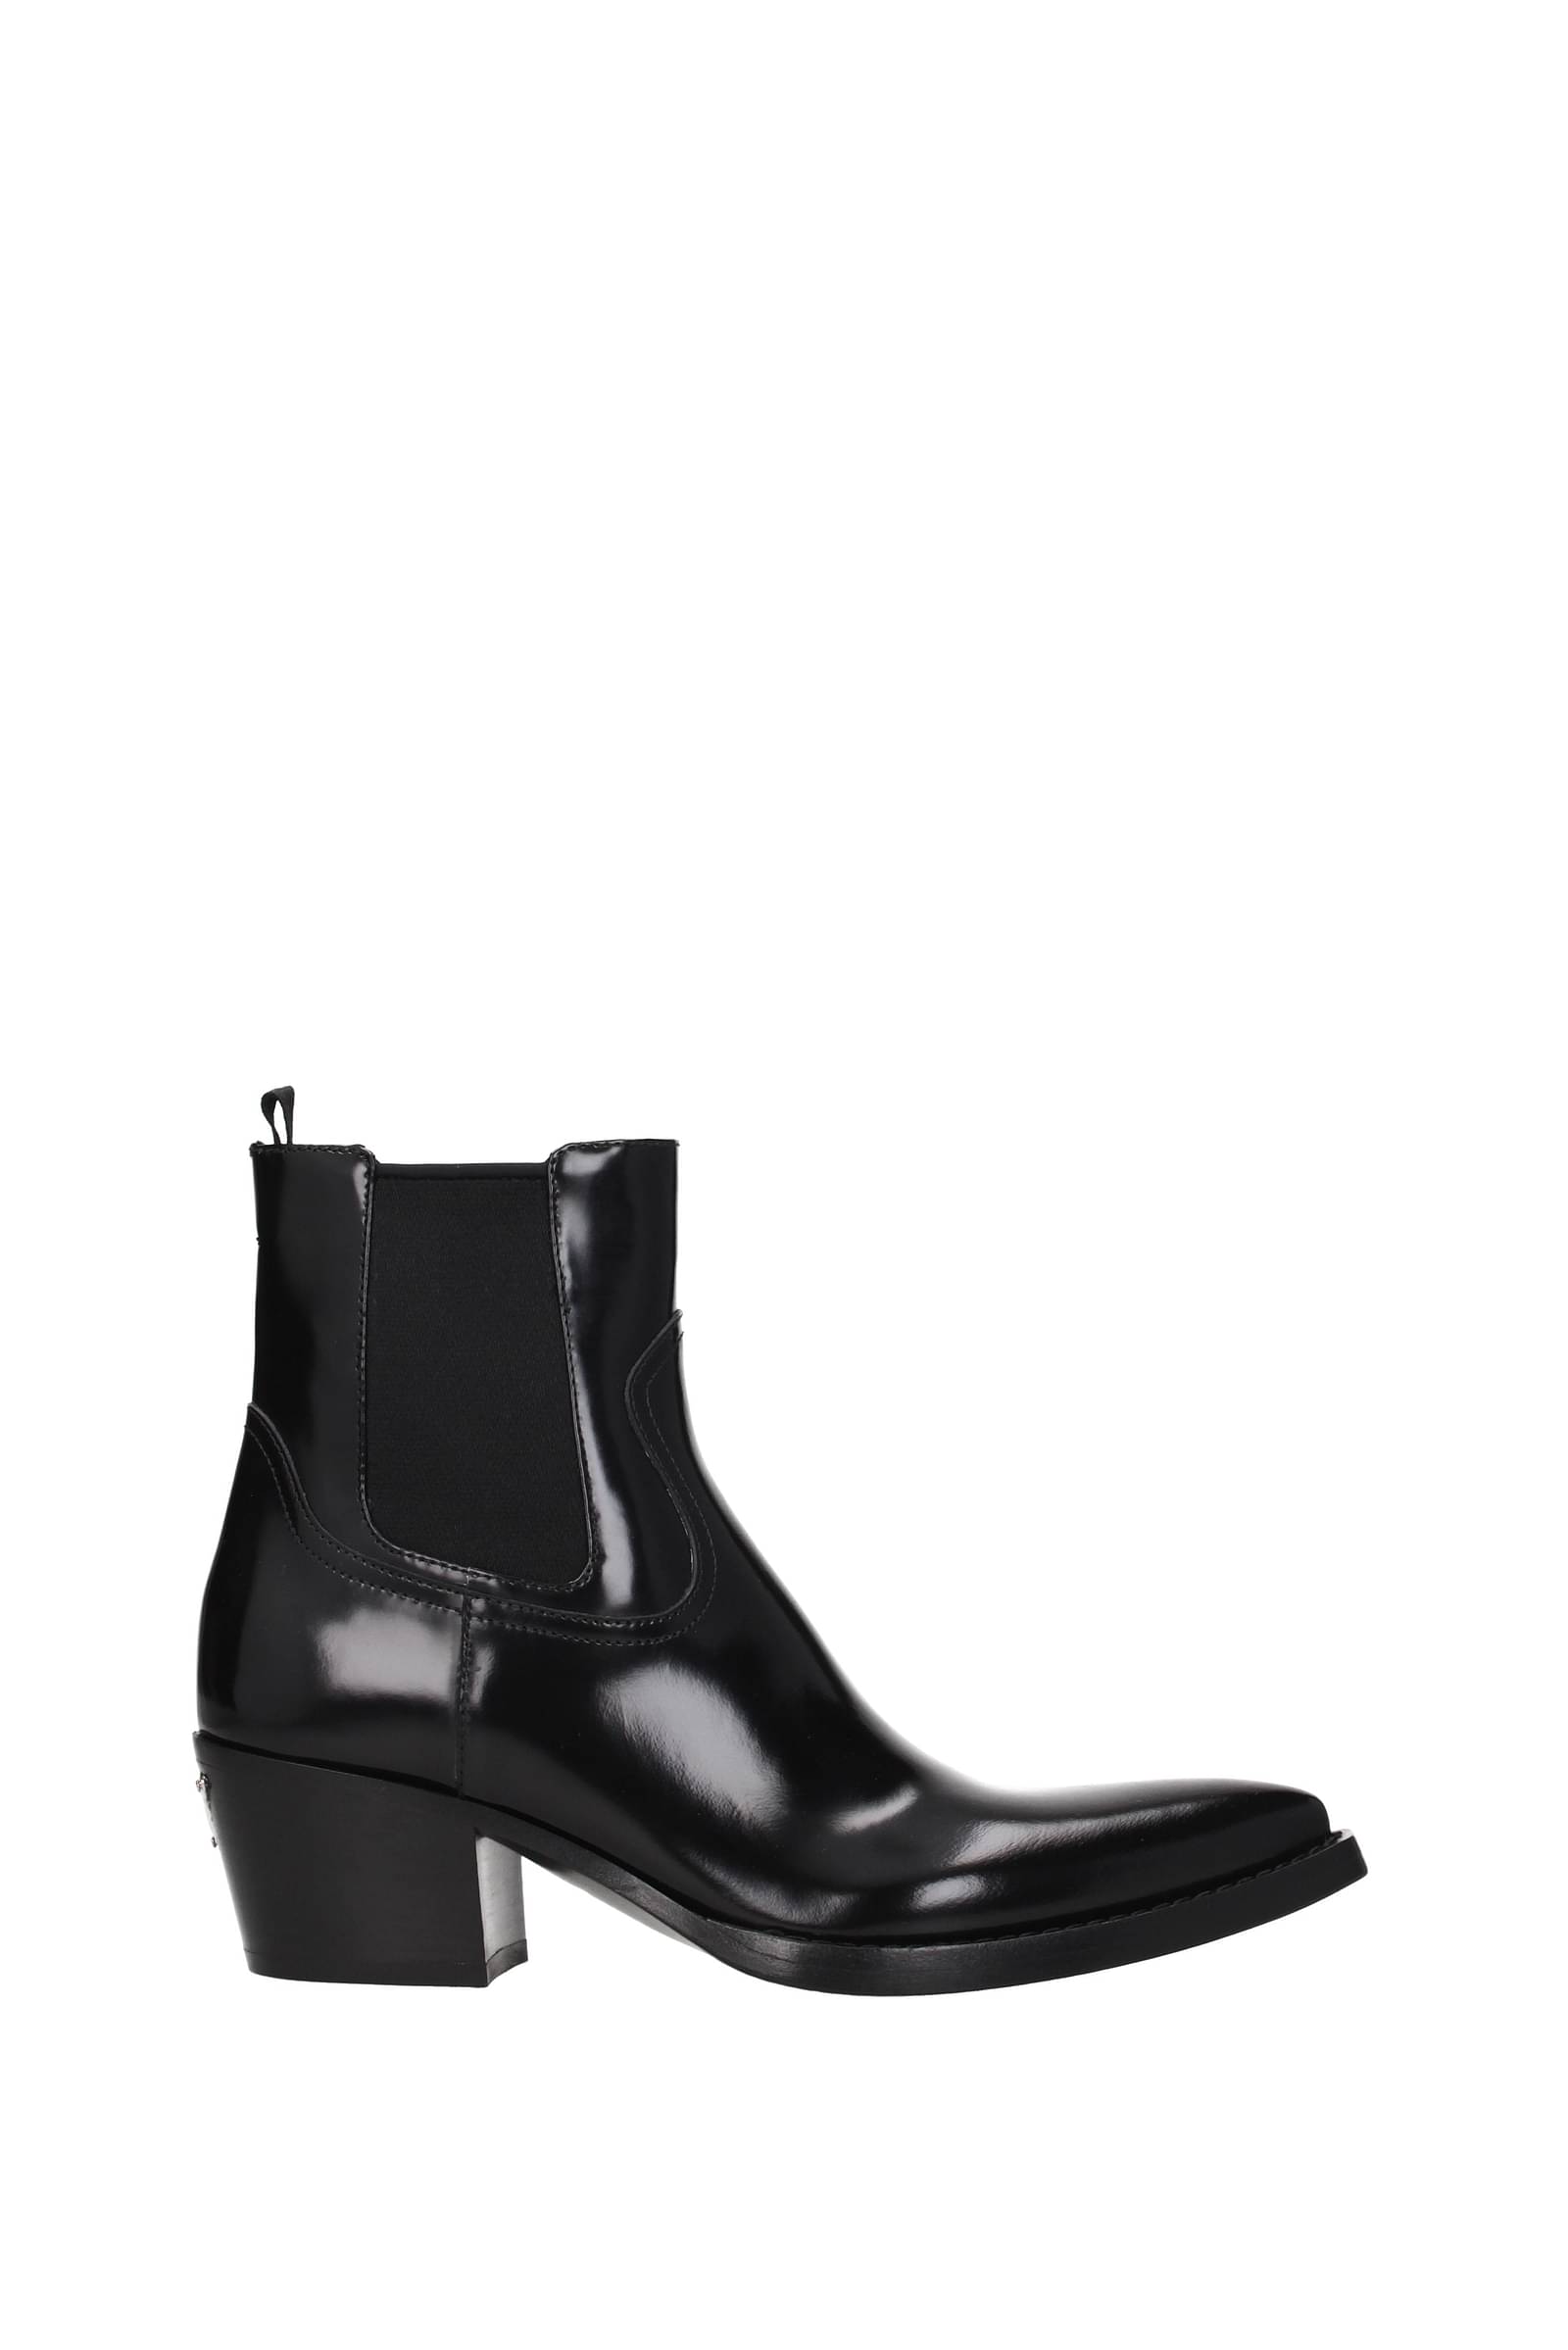 Prada Ankle boots Women 1T132N055055F0002 Leather Black 937,5€